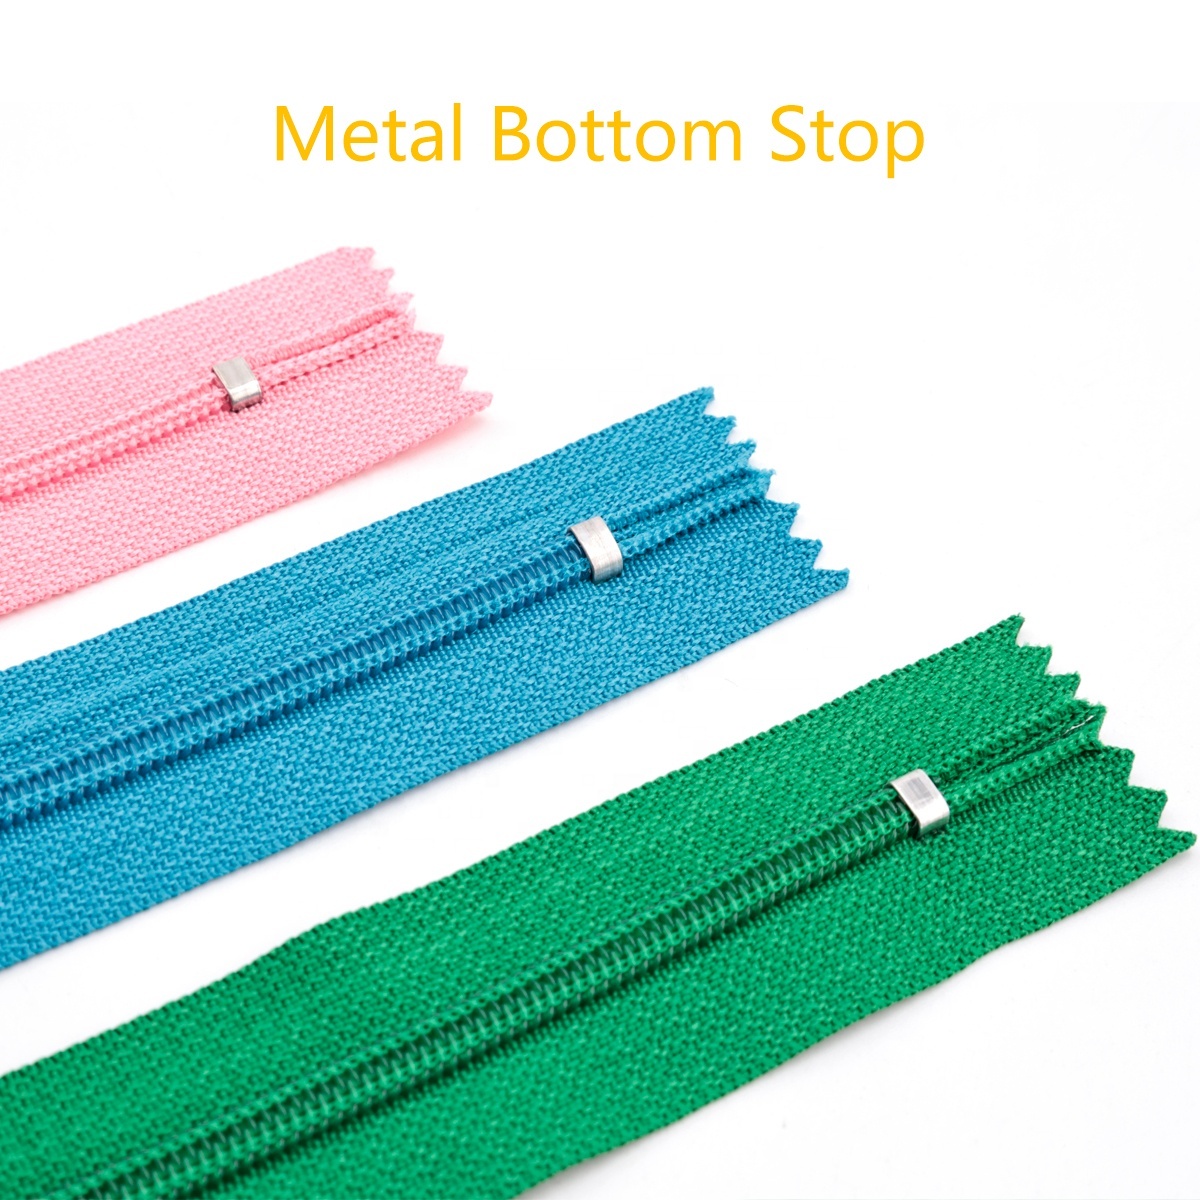 China Factory Competitive Price Custom Closed End Nylon Zipper-QLQ Zipper